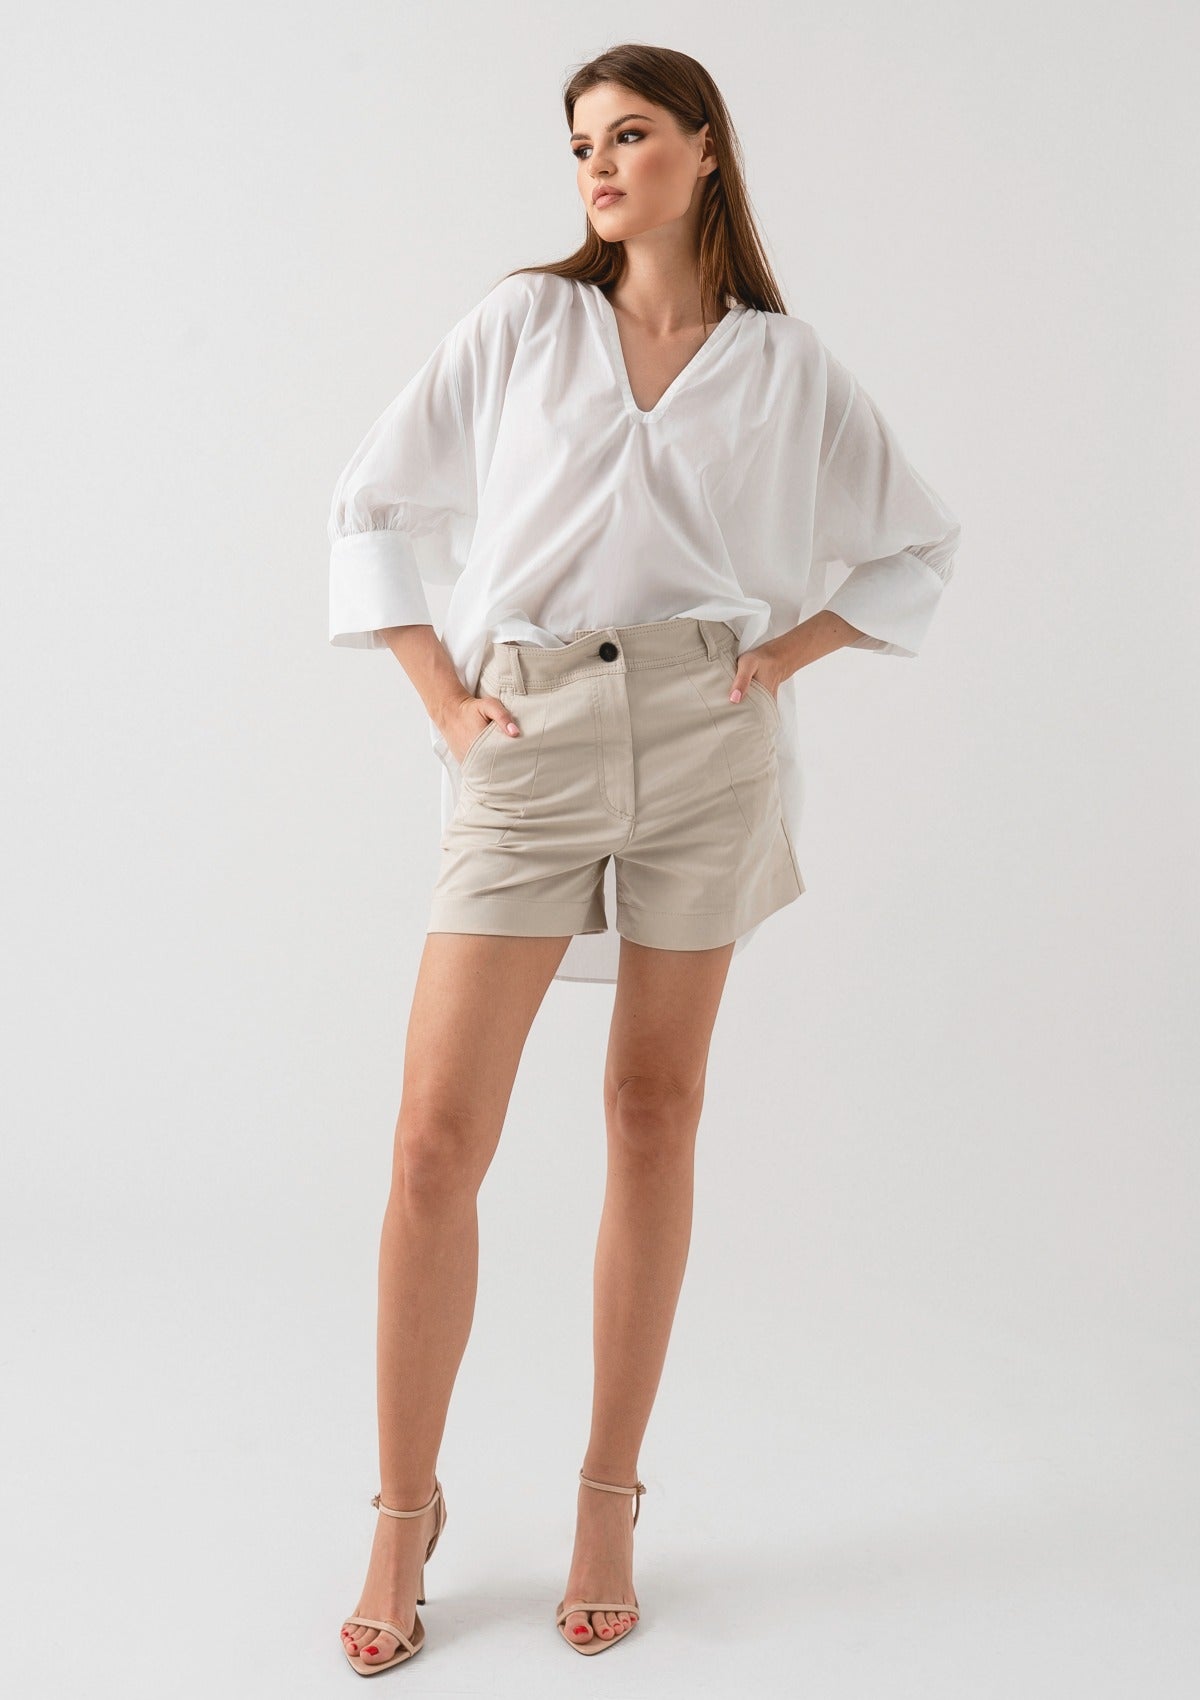 white-cotton-women's-shirt-loose-fit-Silk & tonic